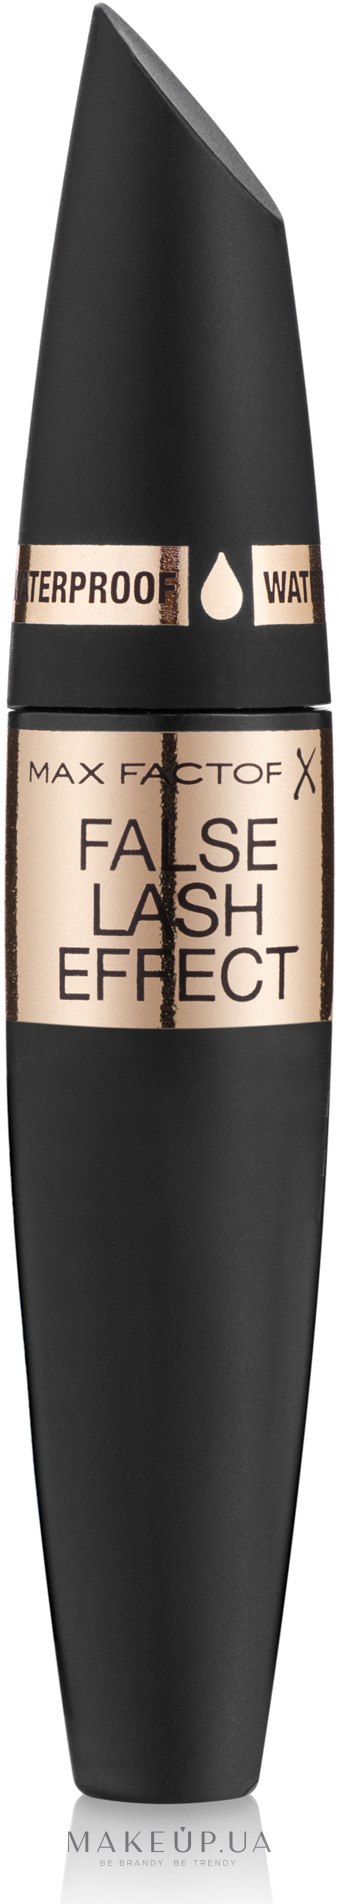 Max Factor False Lash Effect Waterproof Mascara